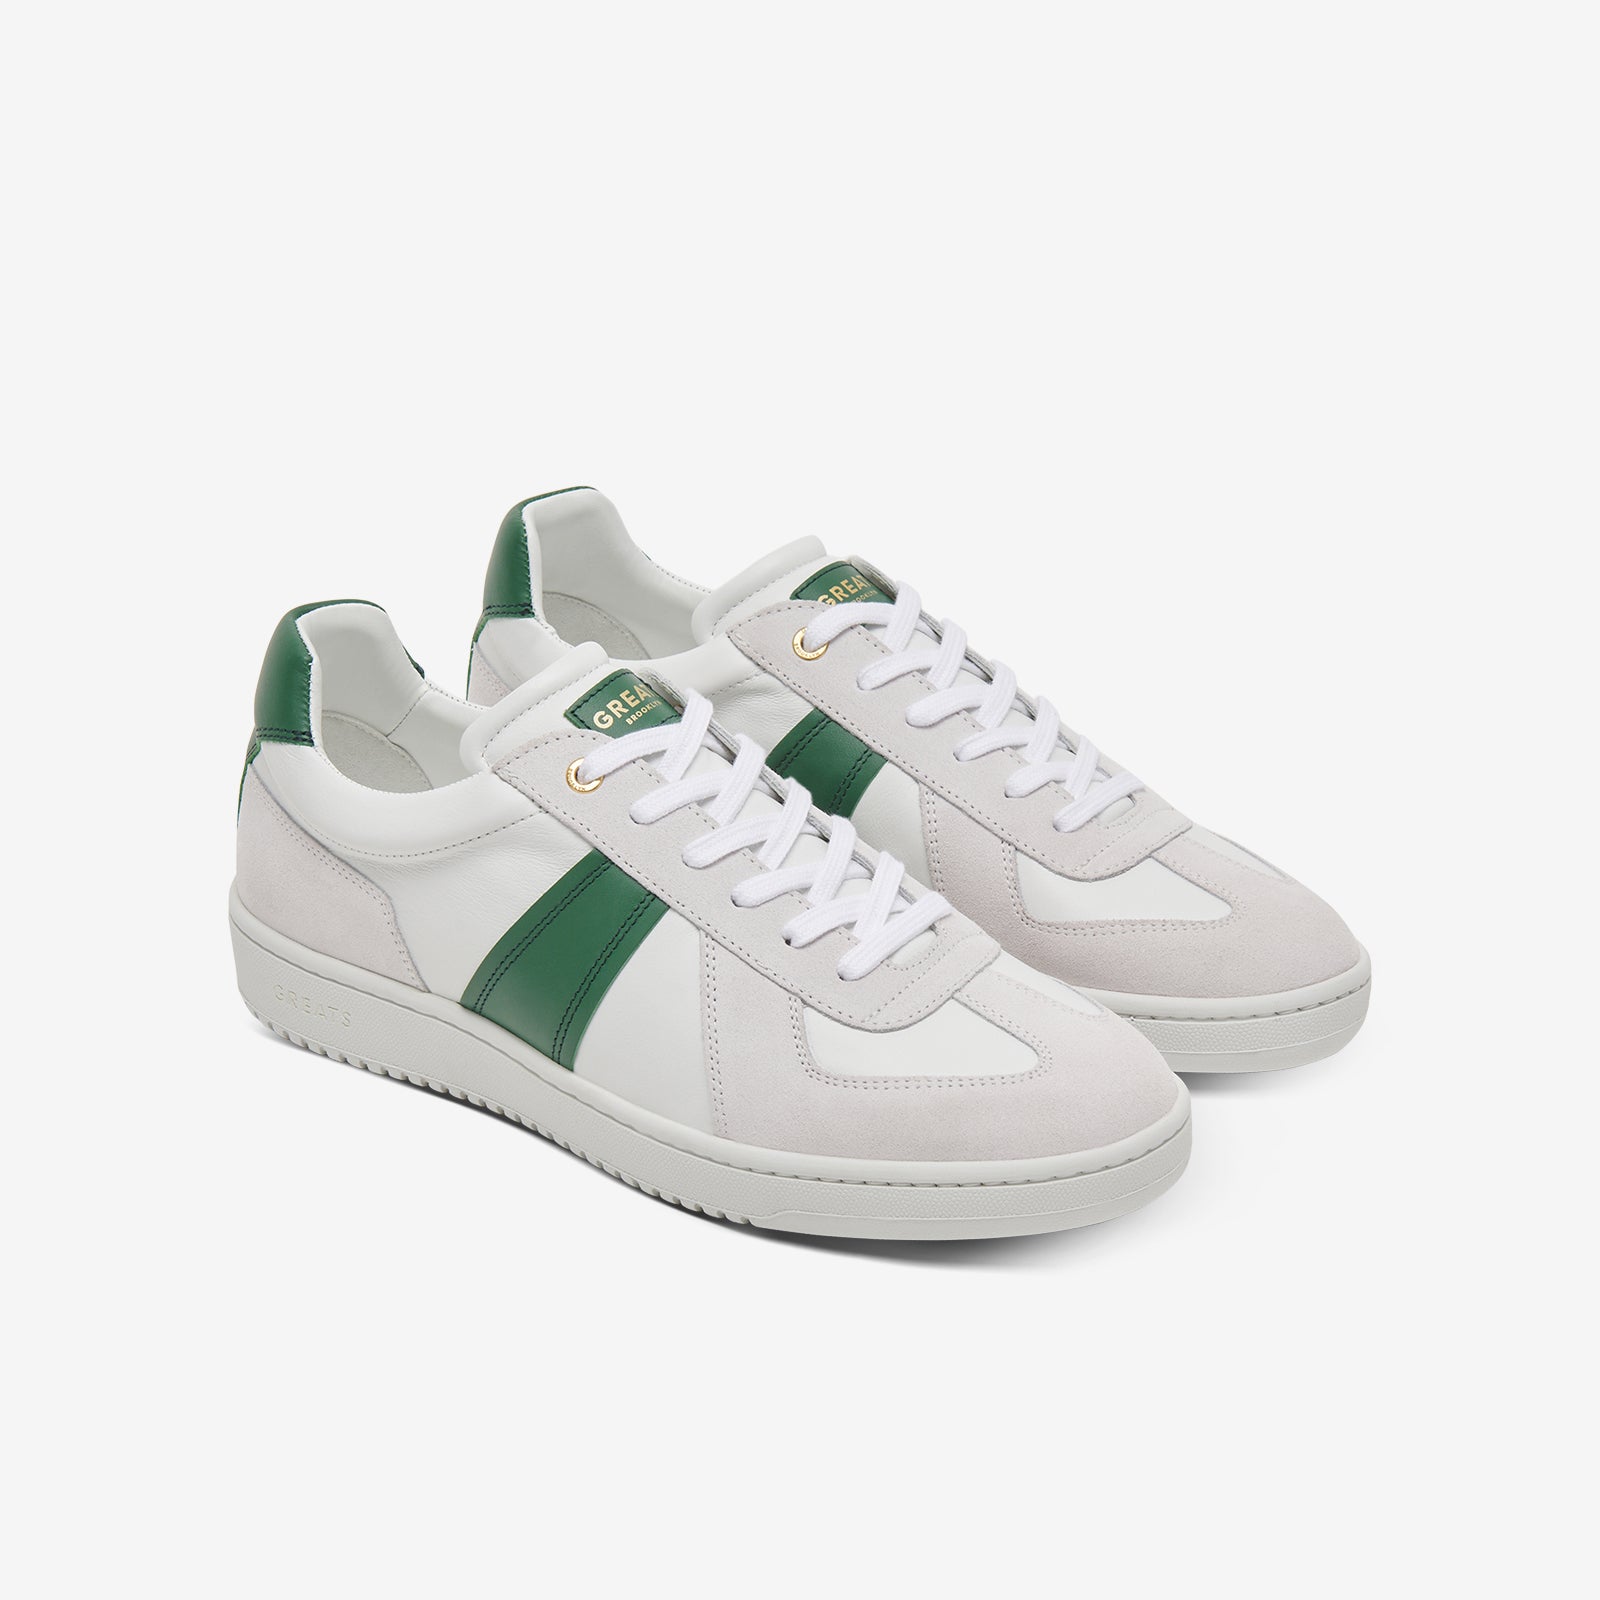 The GAT Sneaker - Blanco Green